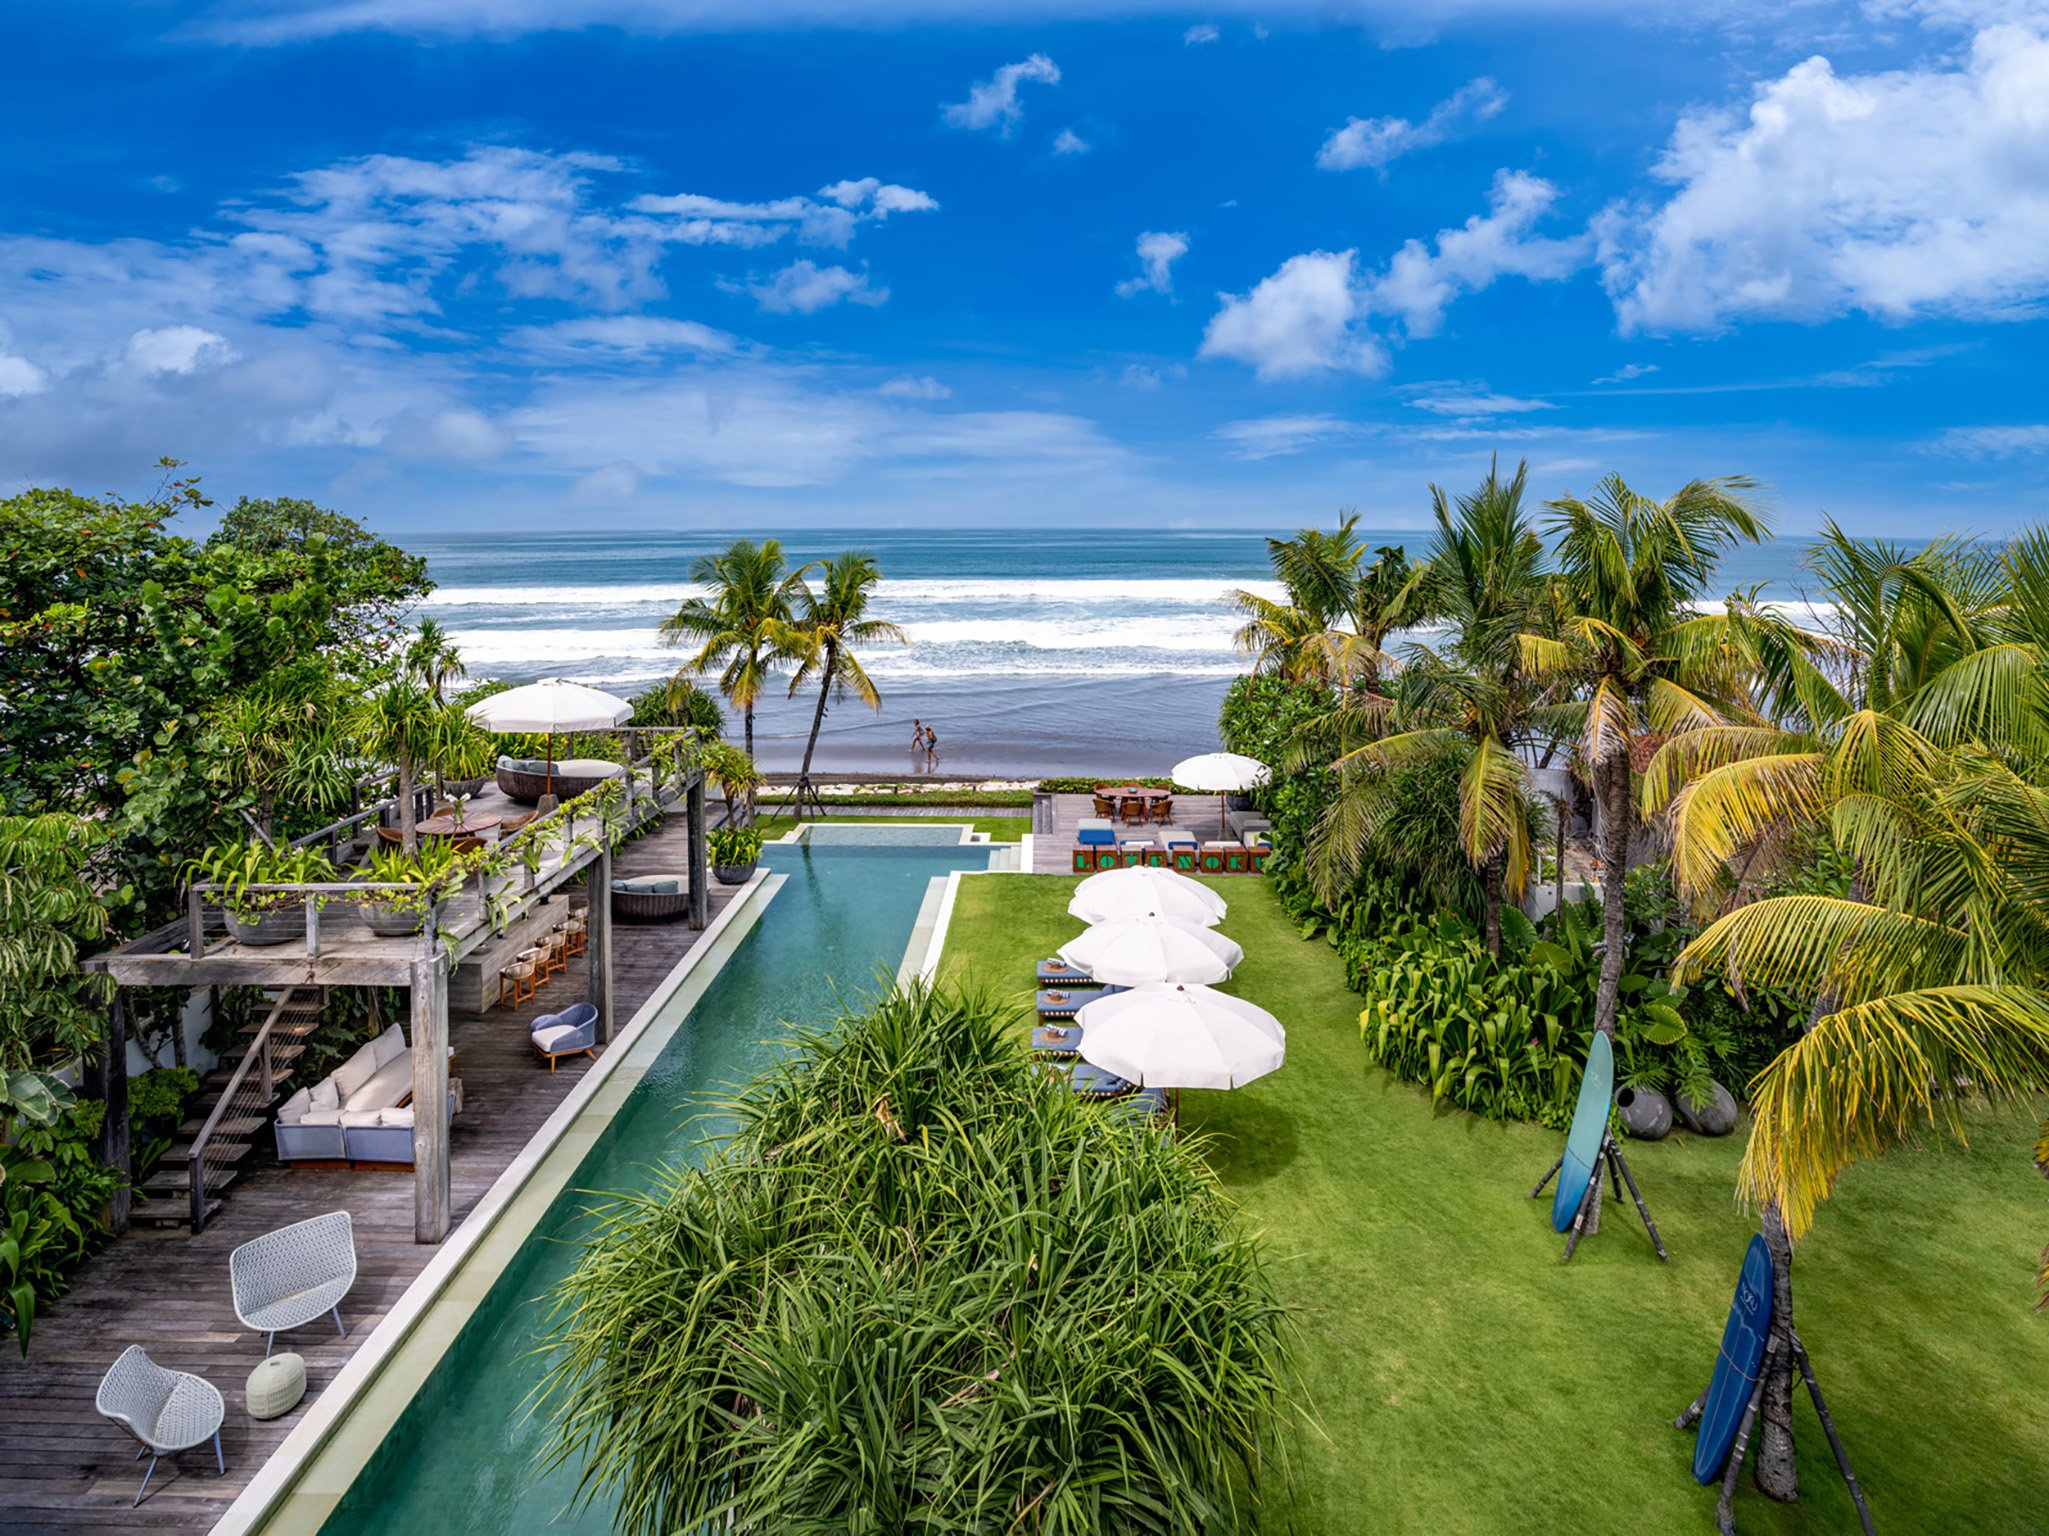 Luxurious Beachfront Retreat, Image from Noku Beach House website